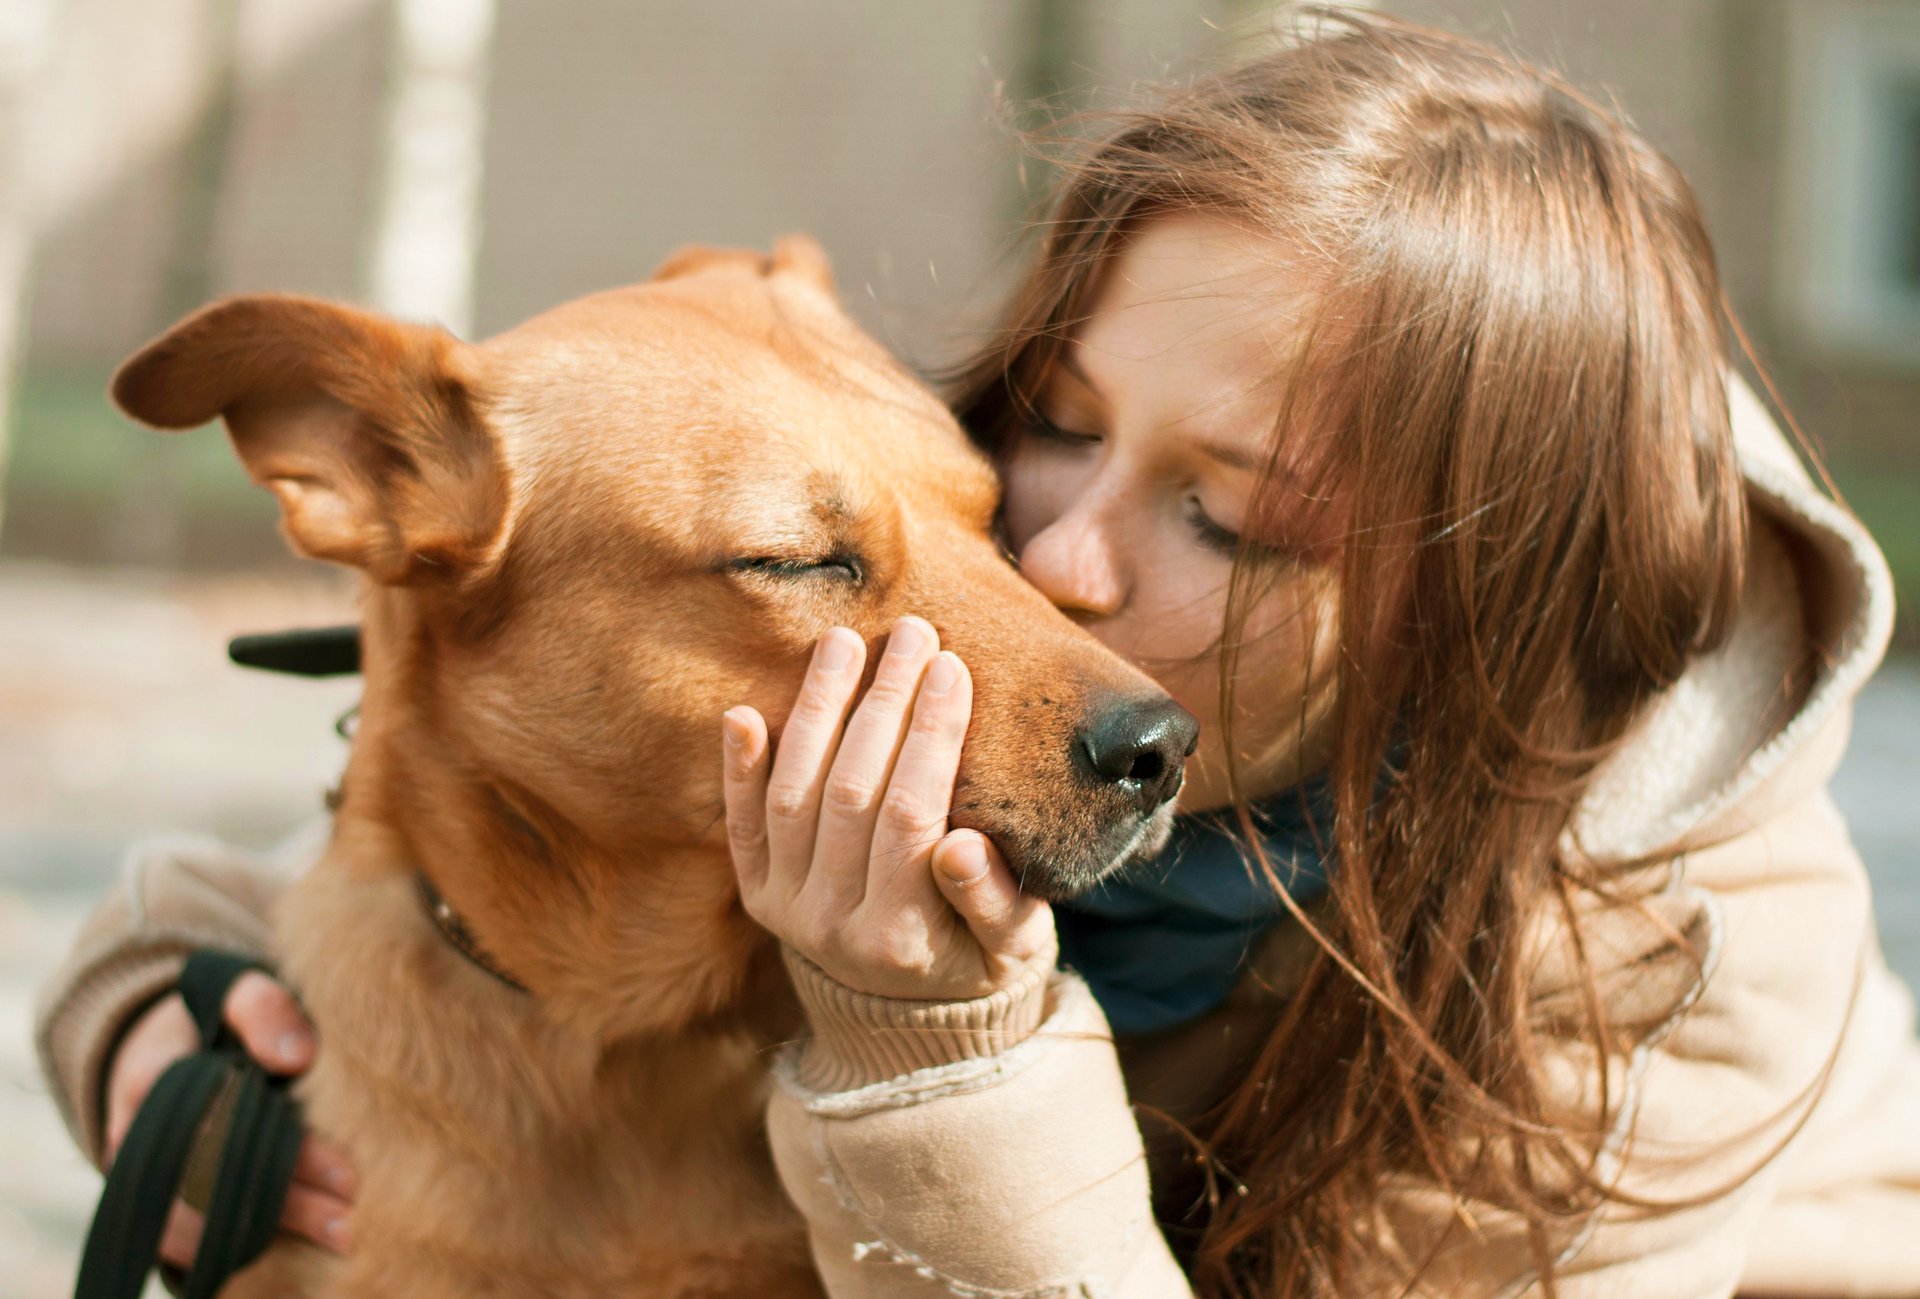 Woman kissing dog